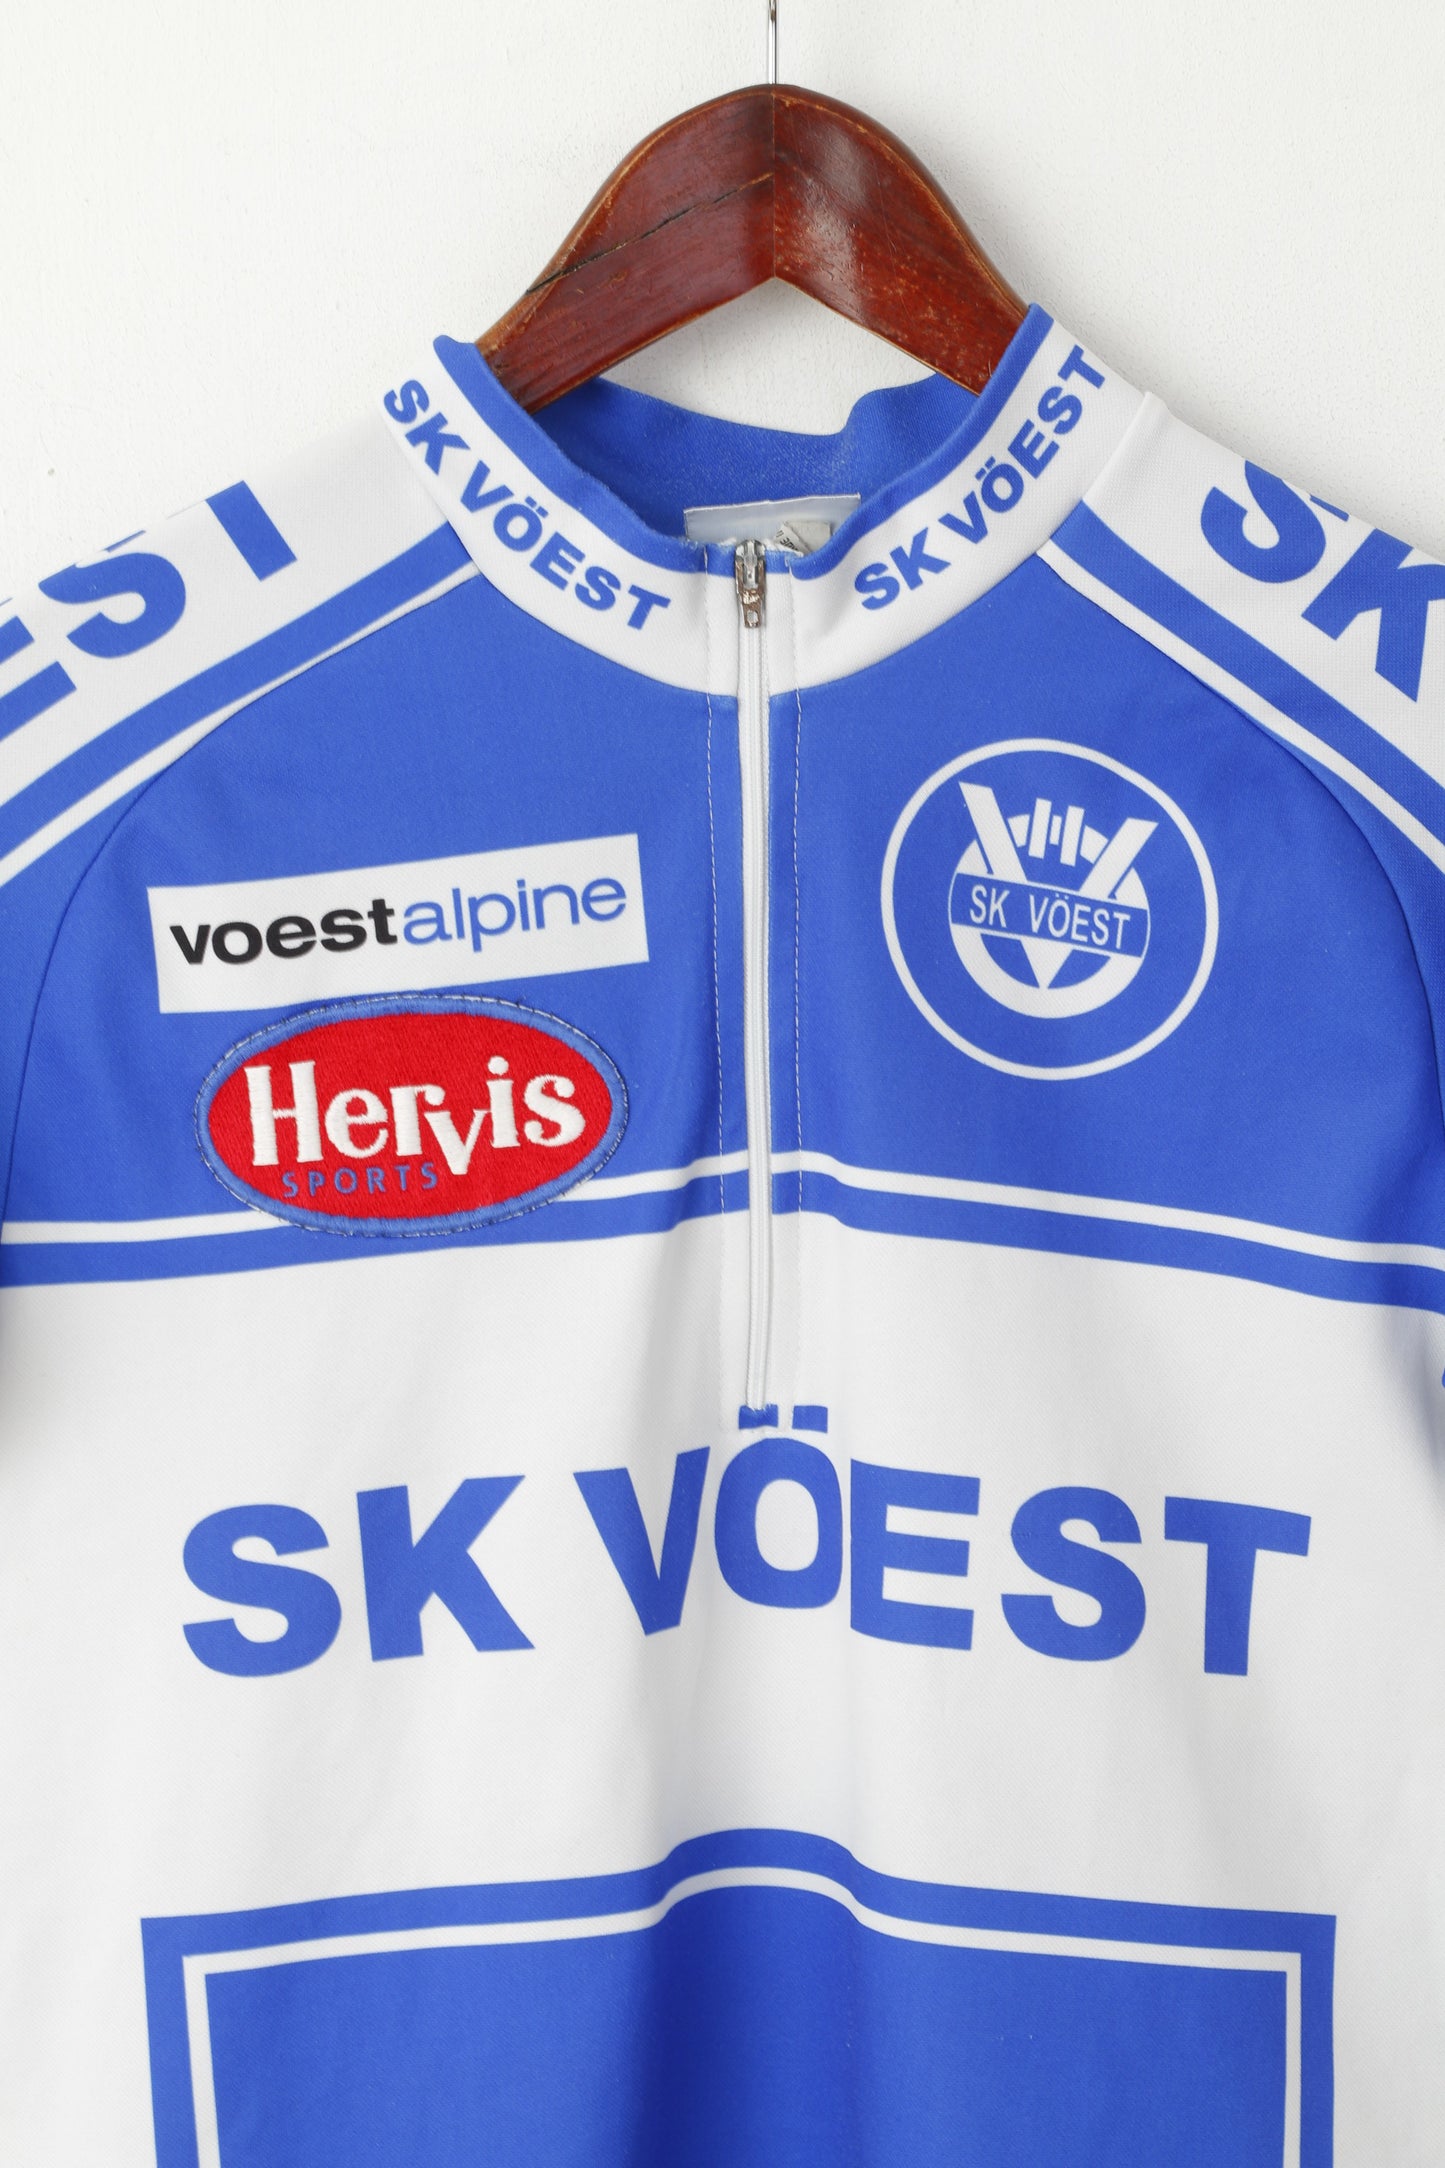 Maglia da ciclismo Sherpa da uomo M blu vintage Hervis Sports SK Voest Retro Bike Top